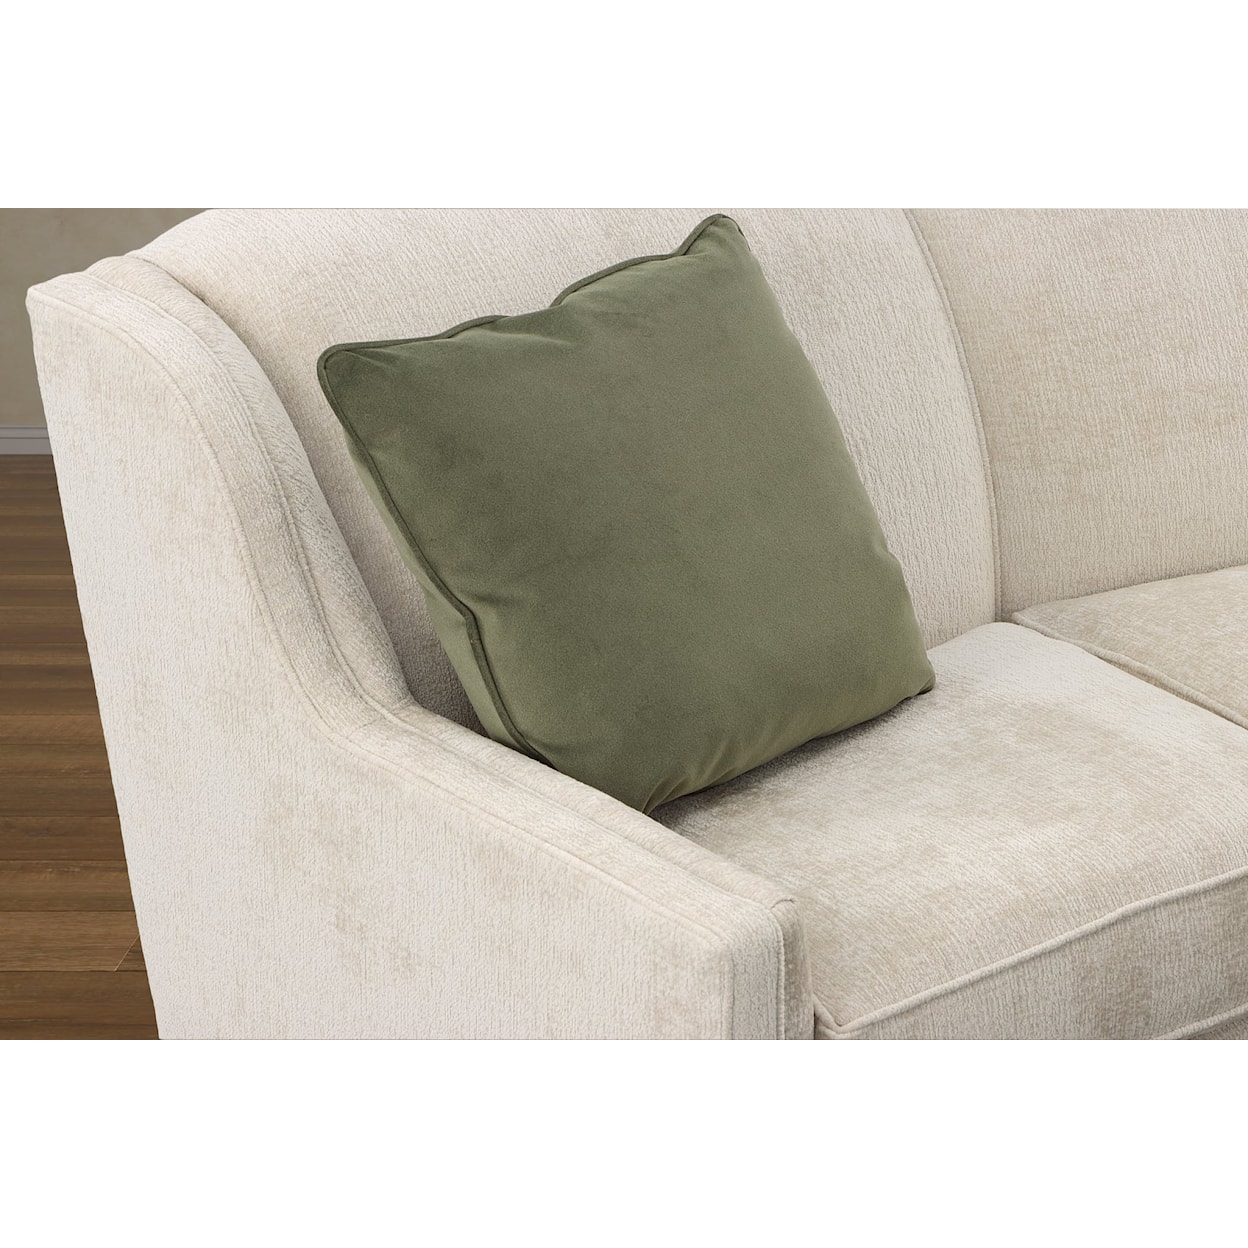 Kirkwood Designs Willamette Sofa